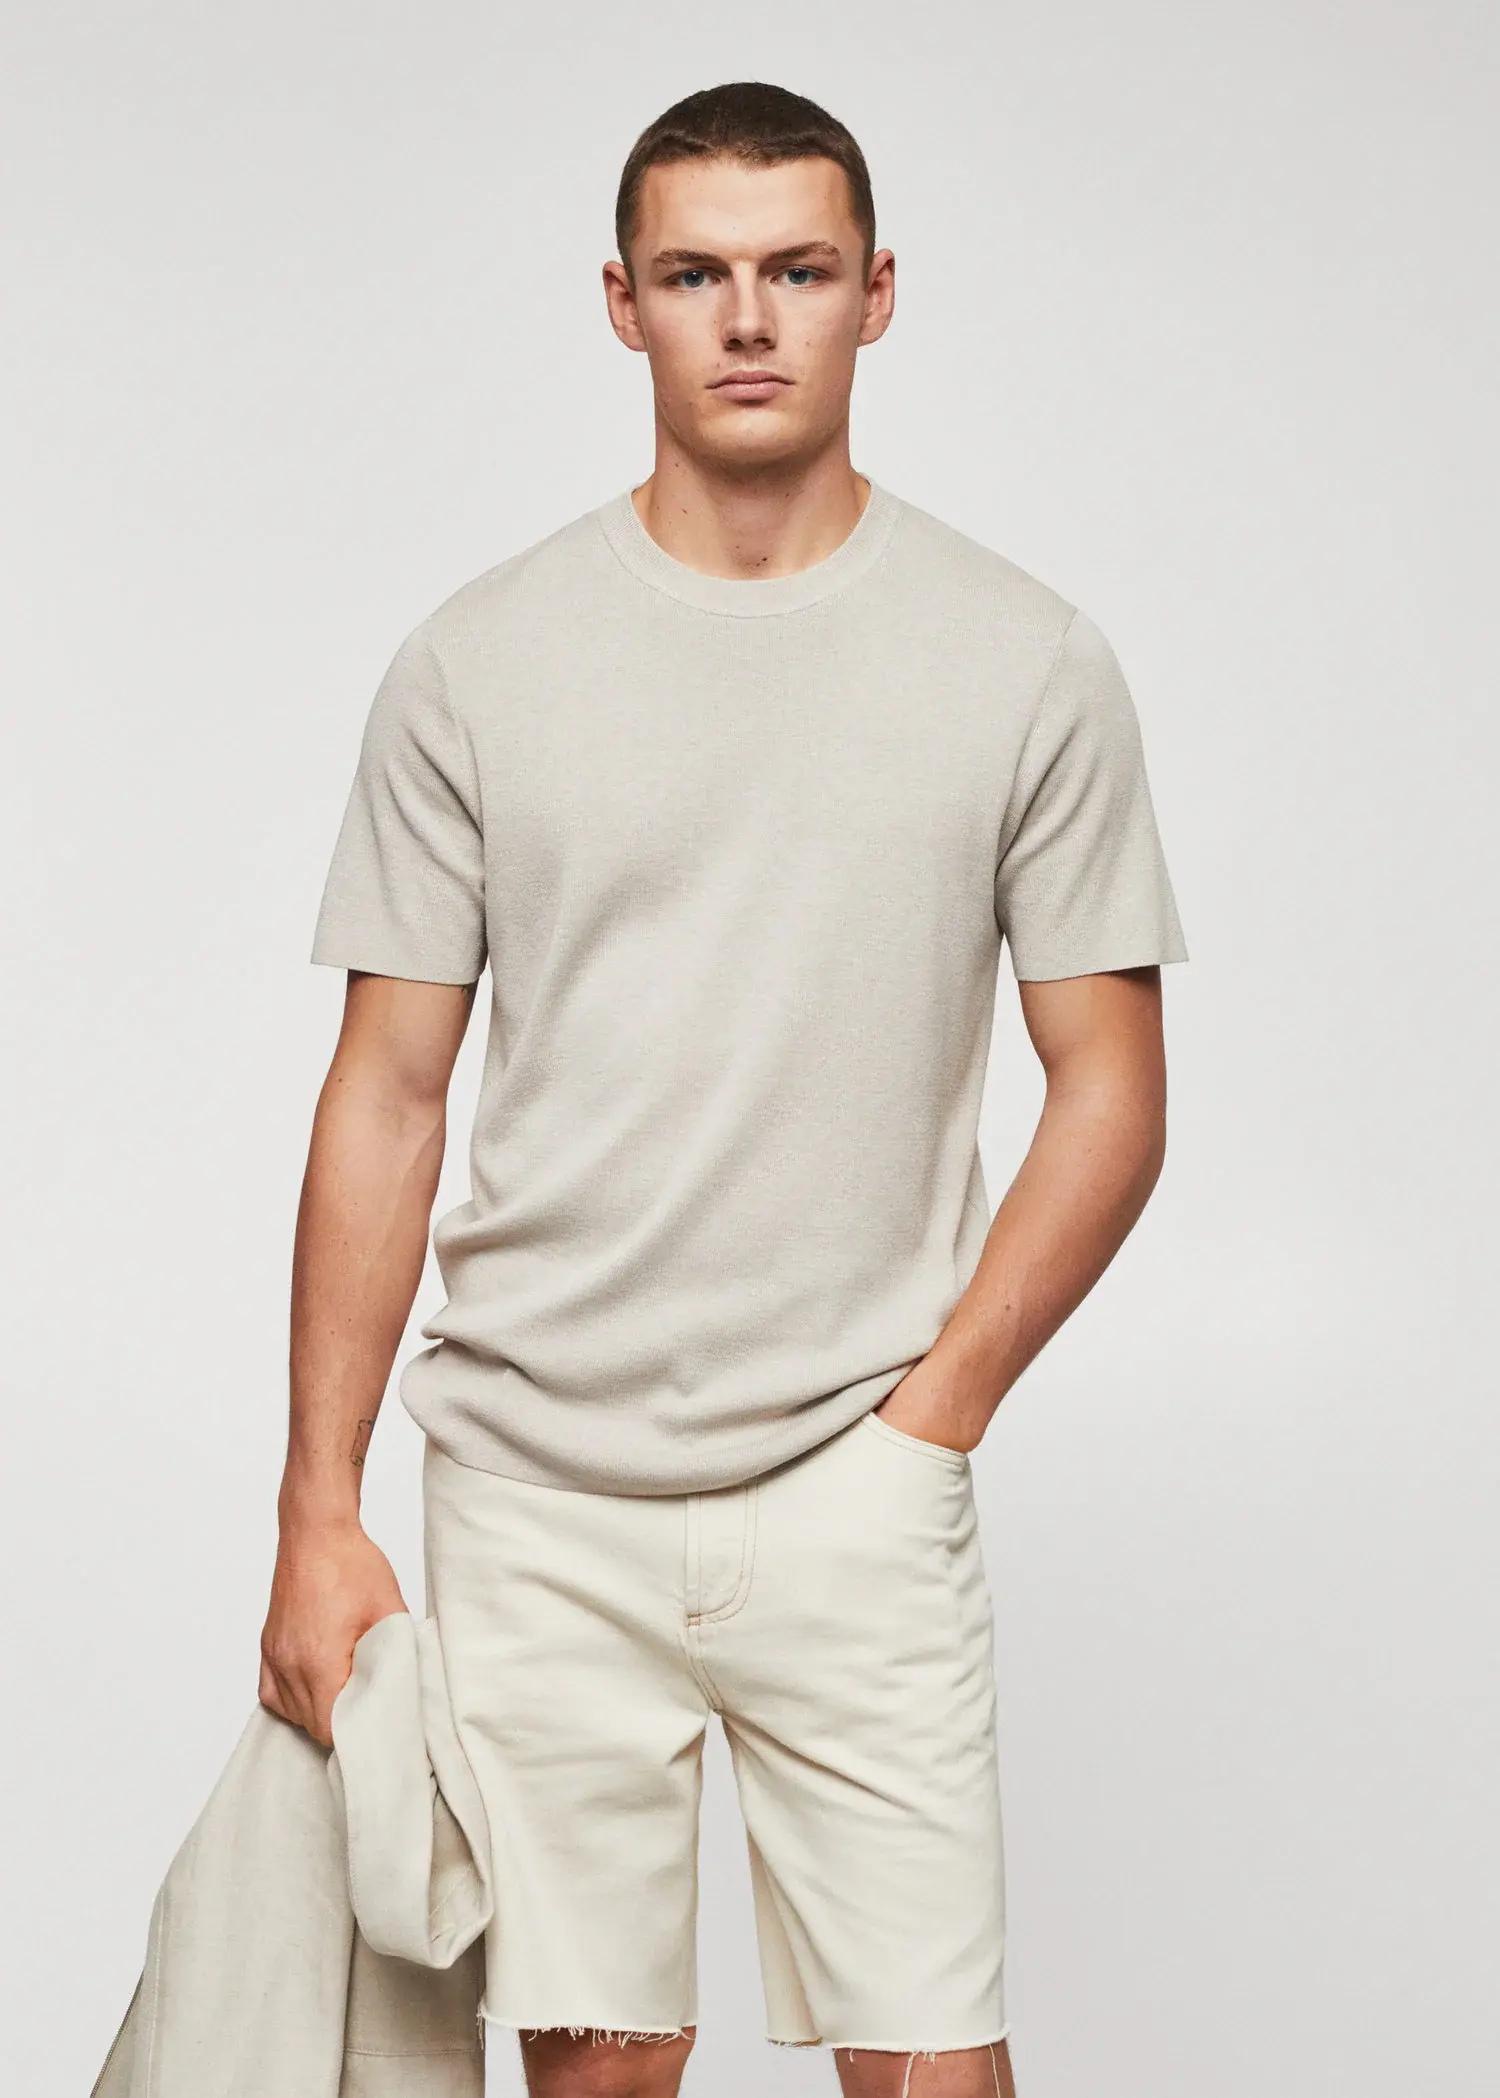 Mango Cotton fine-knit t-shirt. a man wearing a light colored t-shirt and white shorts. 